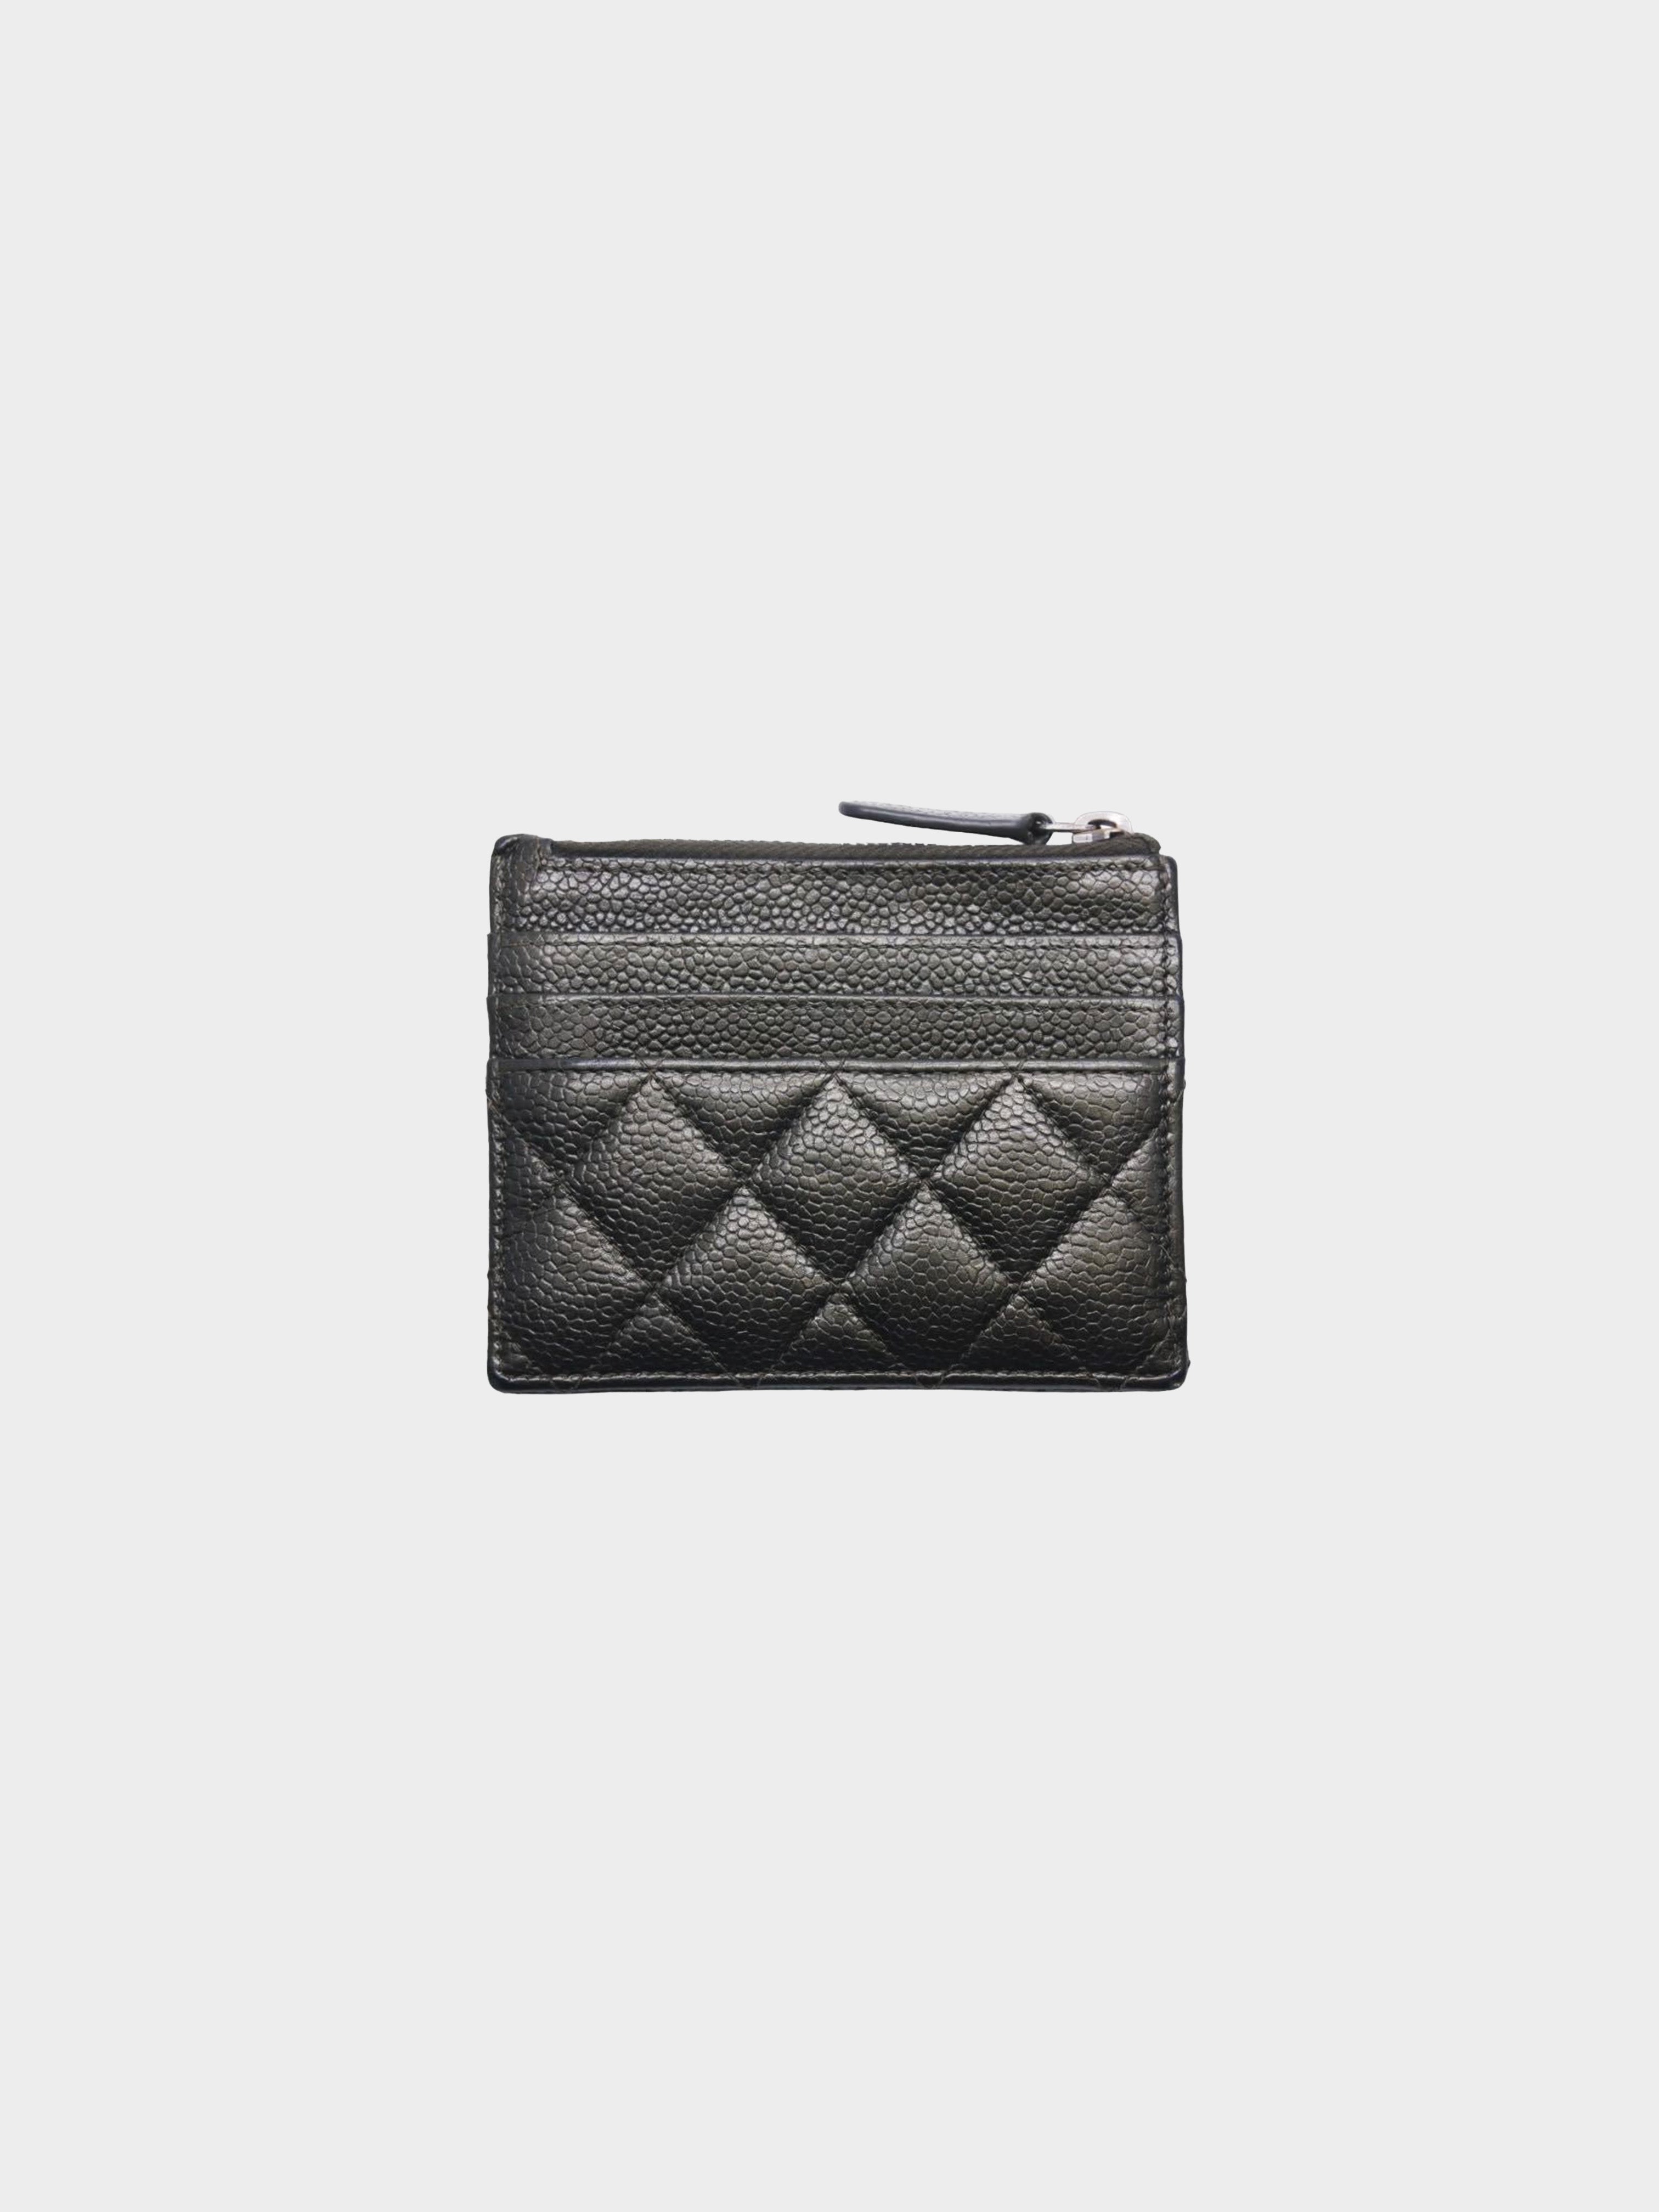 Chanel 2017 Black Caviar Leather Cardholder